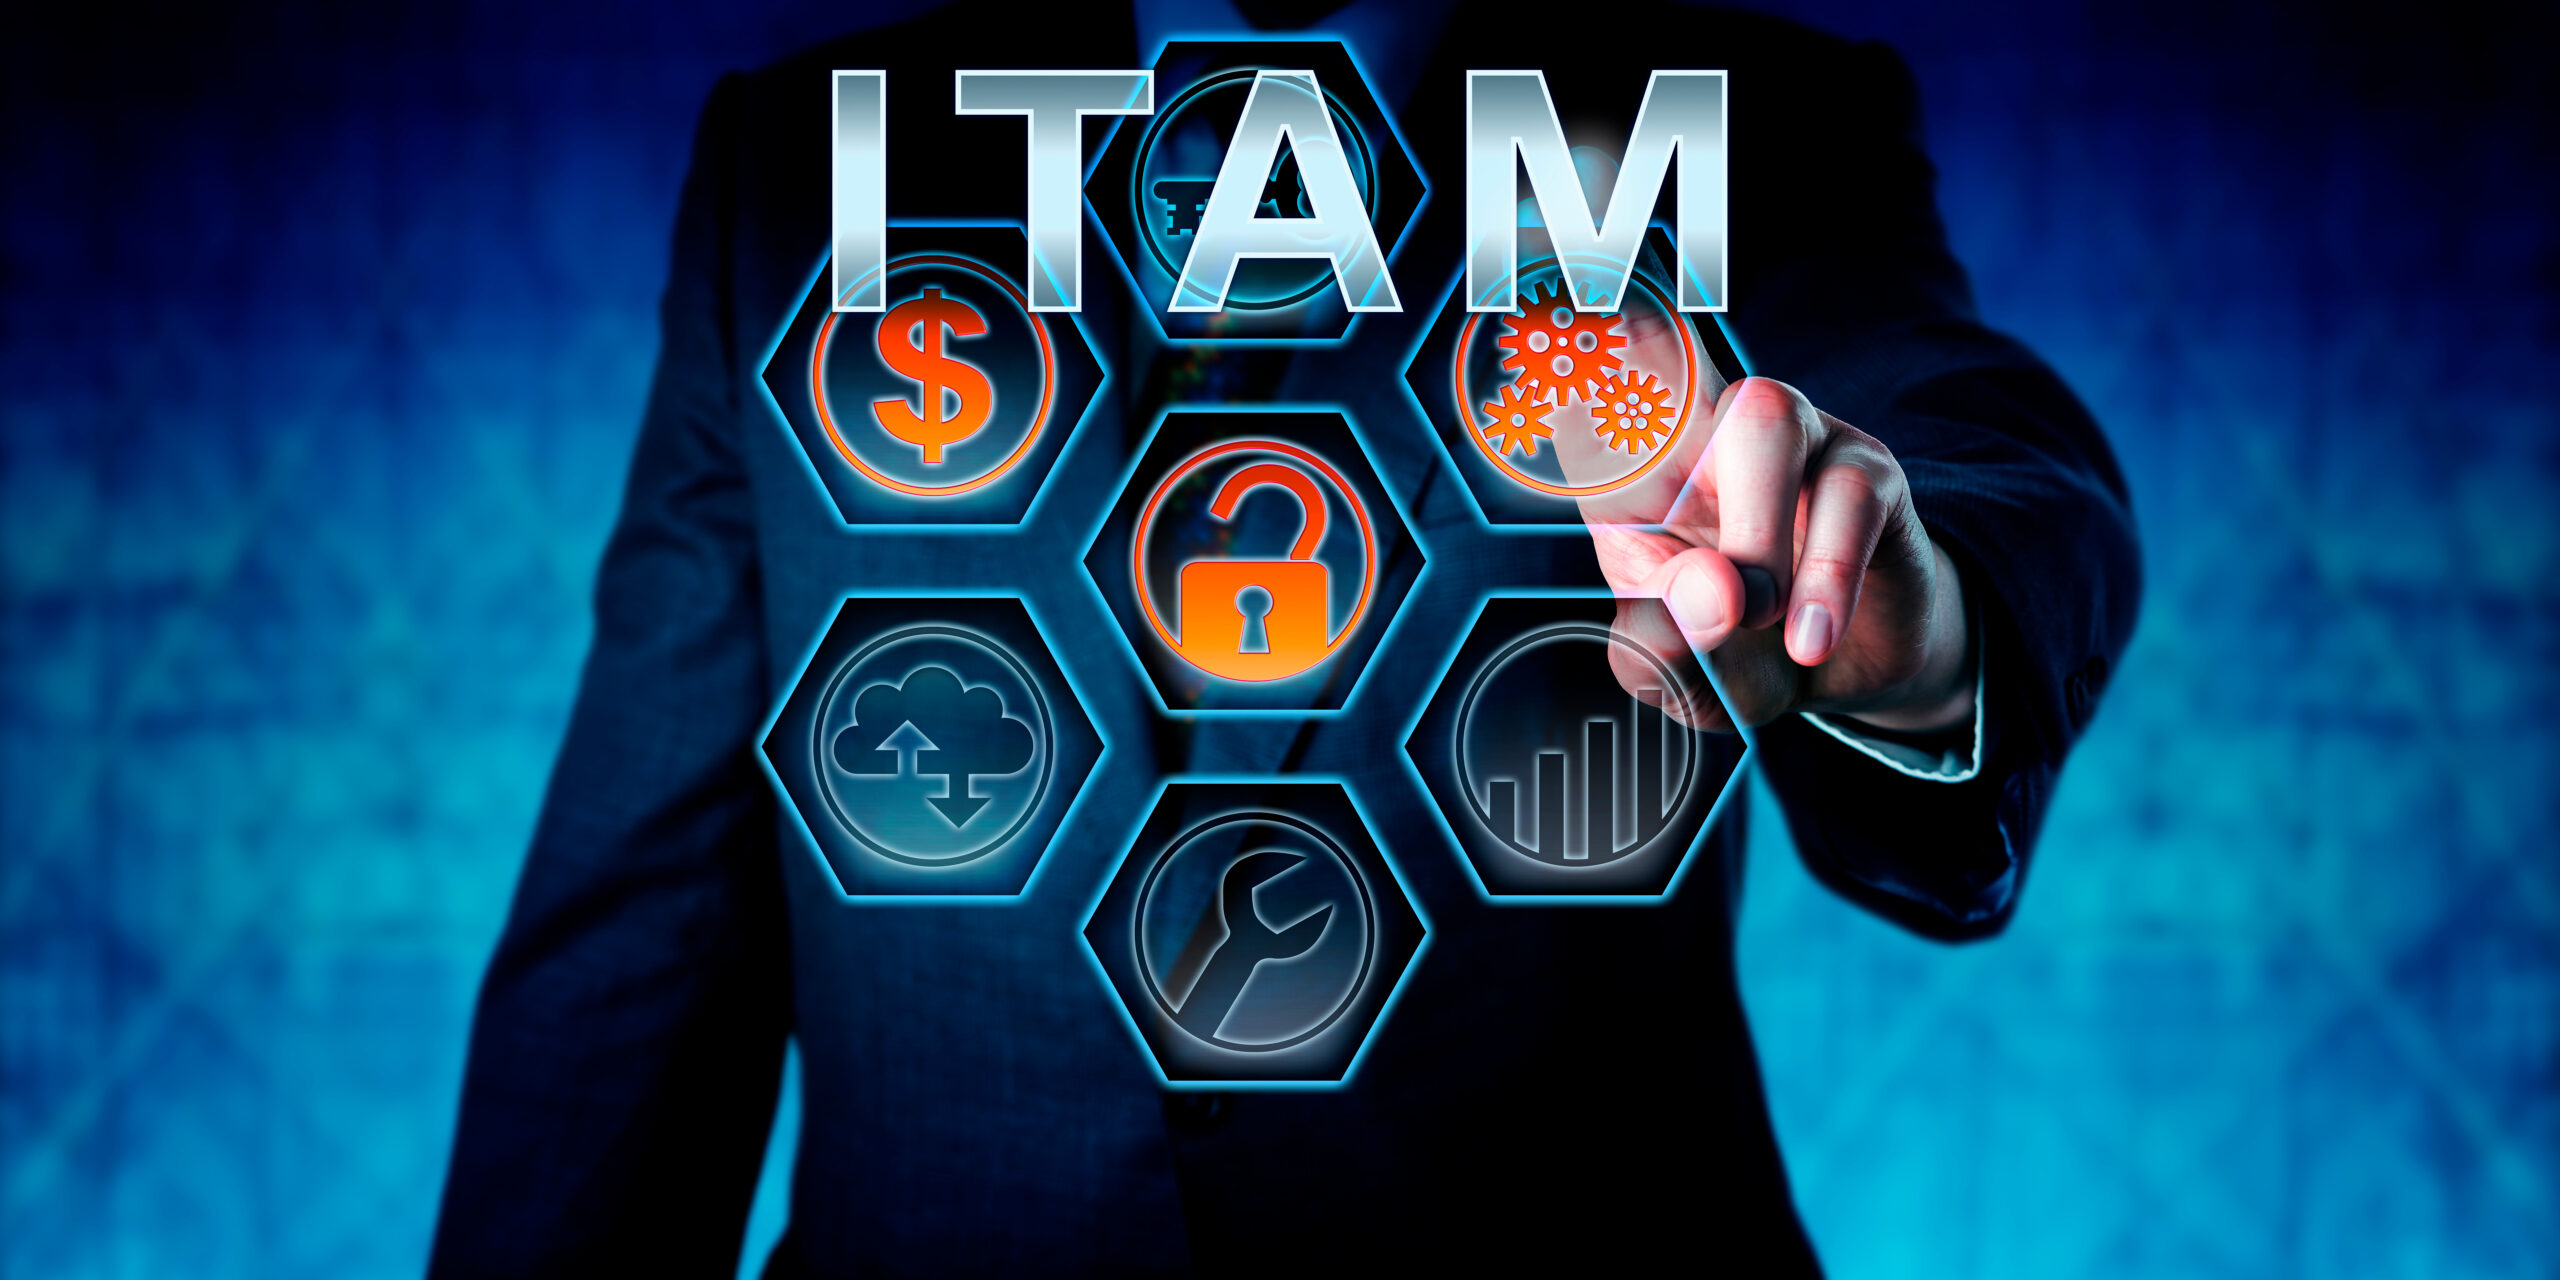 Benefits of IT asset management - ITAM concept image.